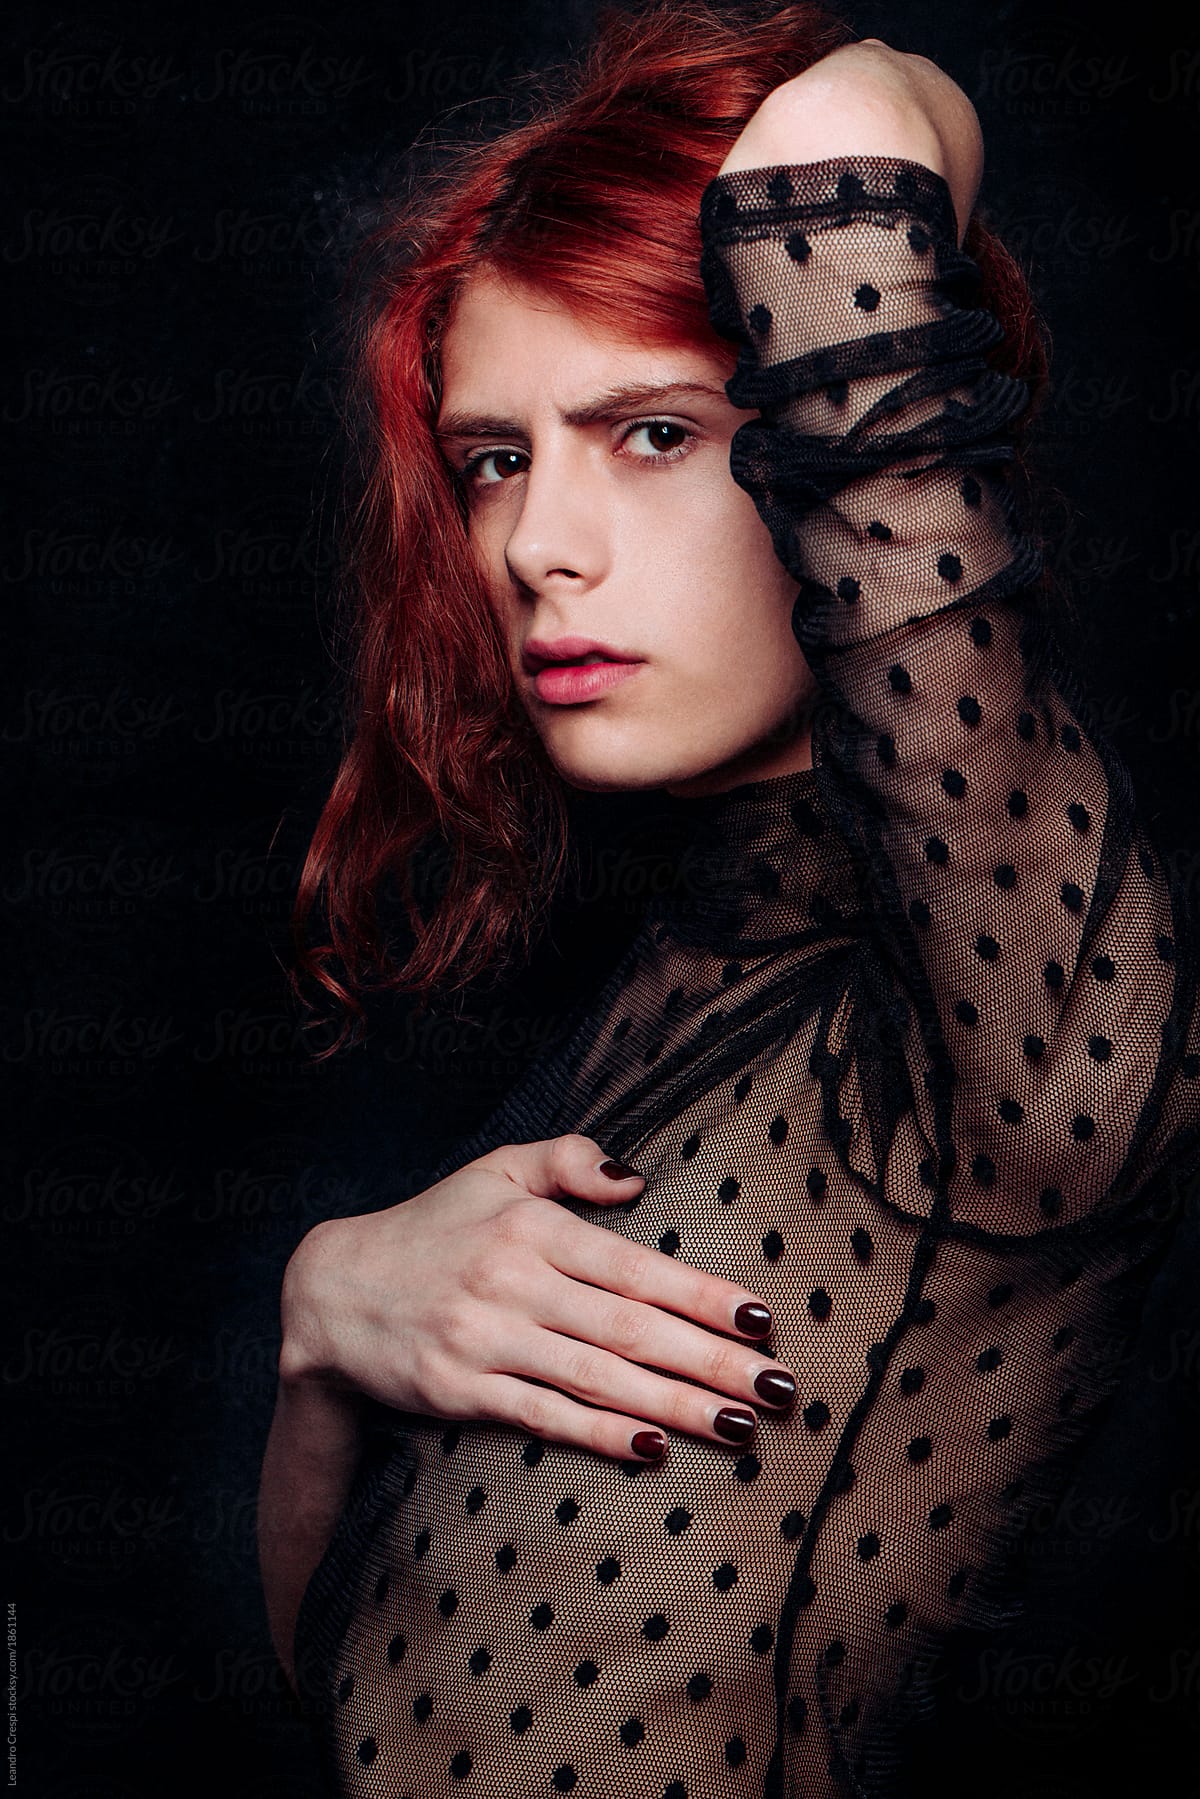 Gender revolution - Transgender woman studio portraits